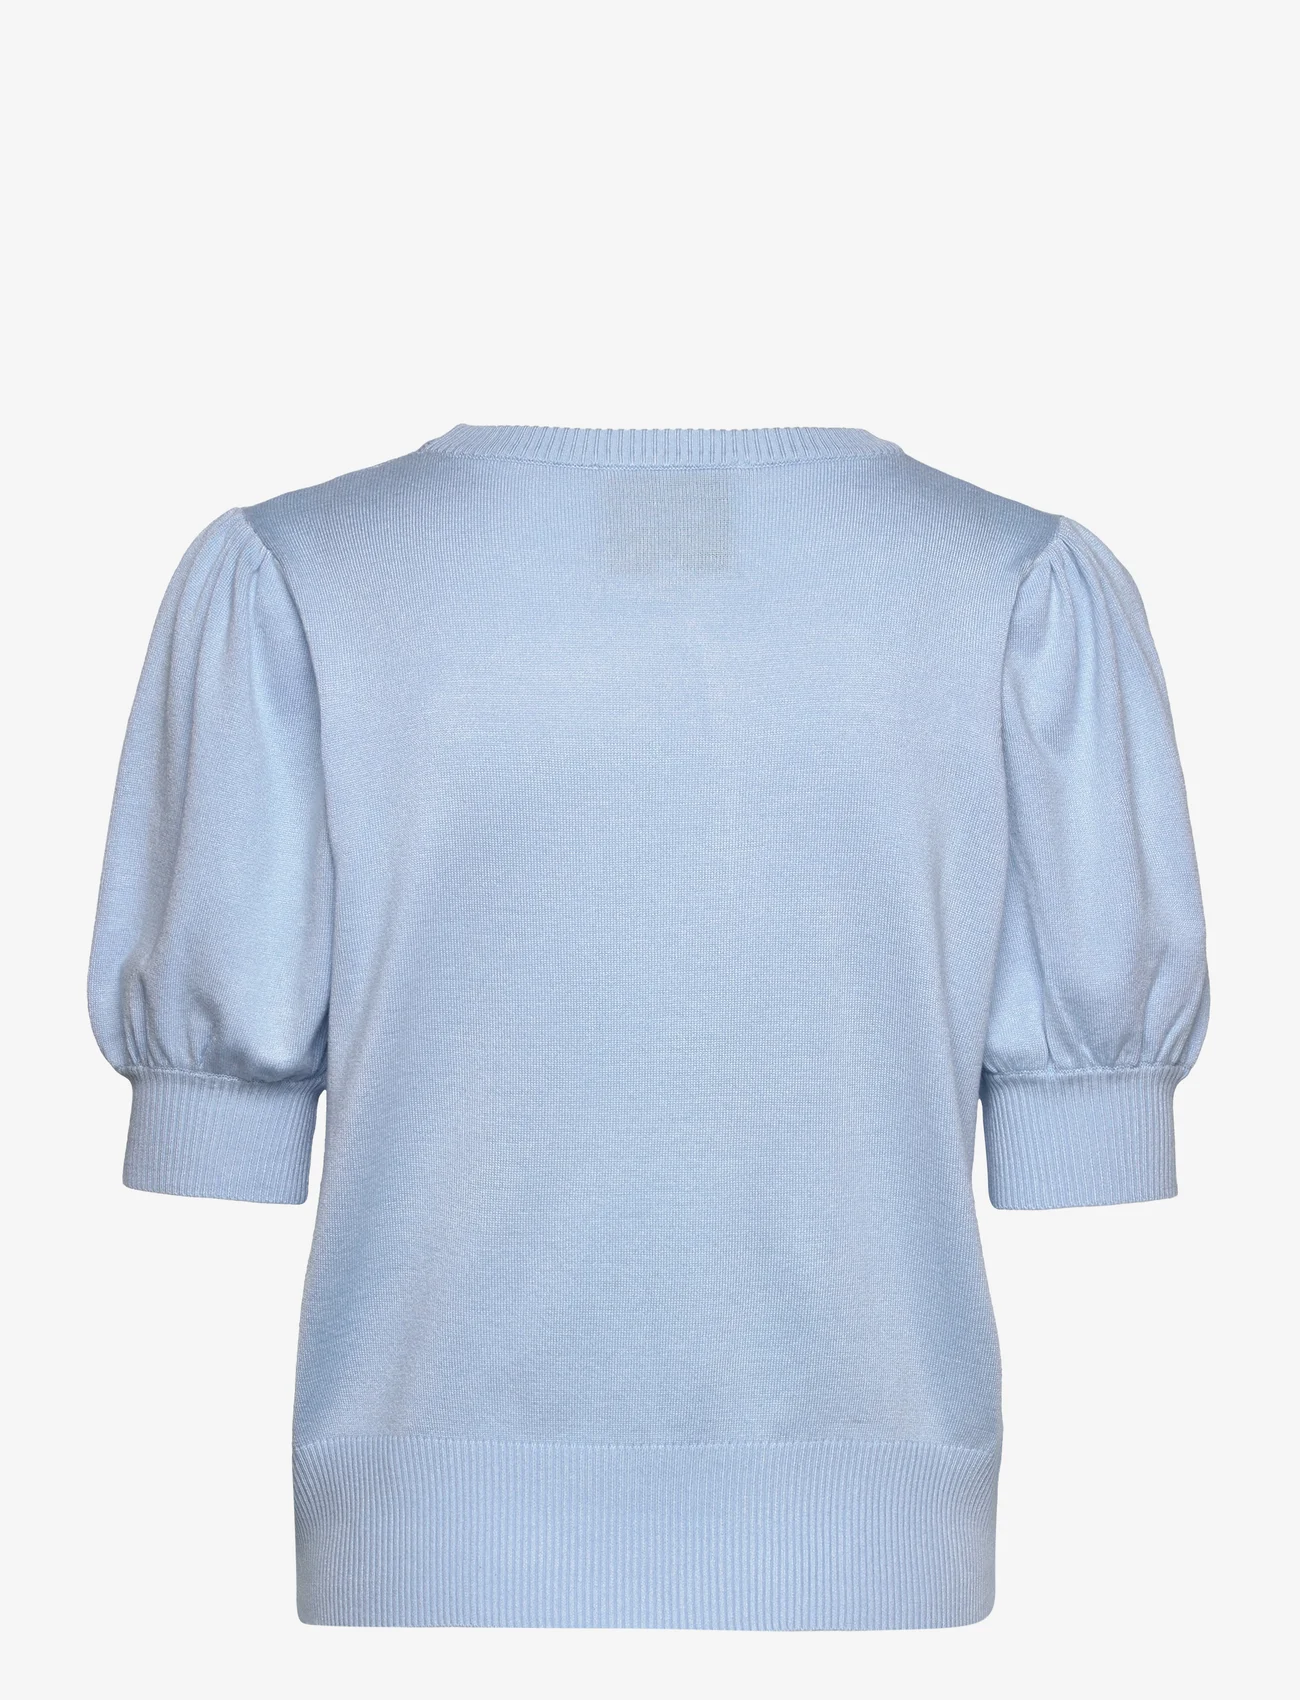 Minus - Liva Strik T-Shirt - truien - ice blue - 1